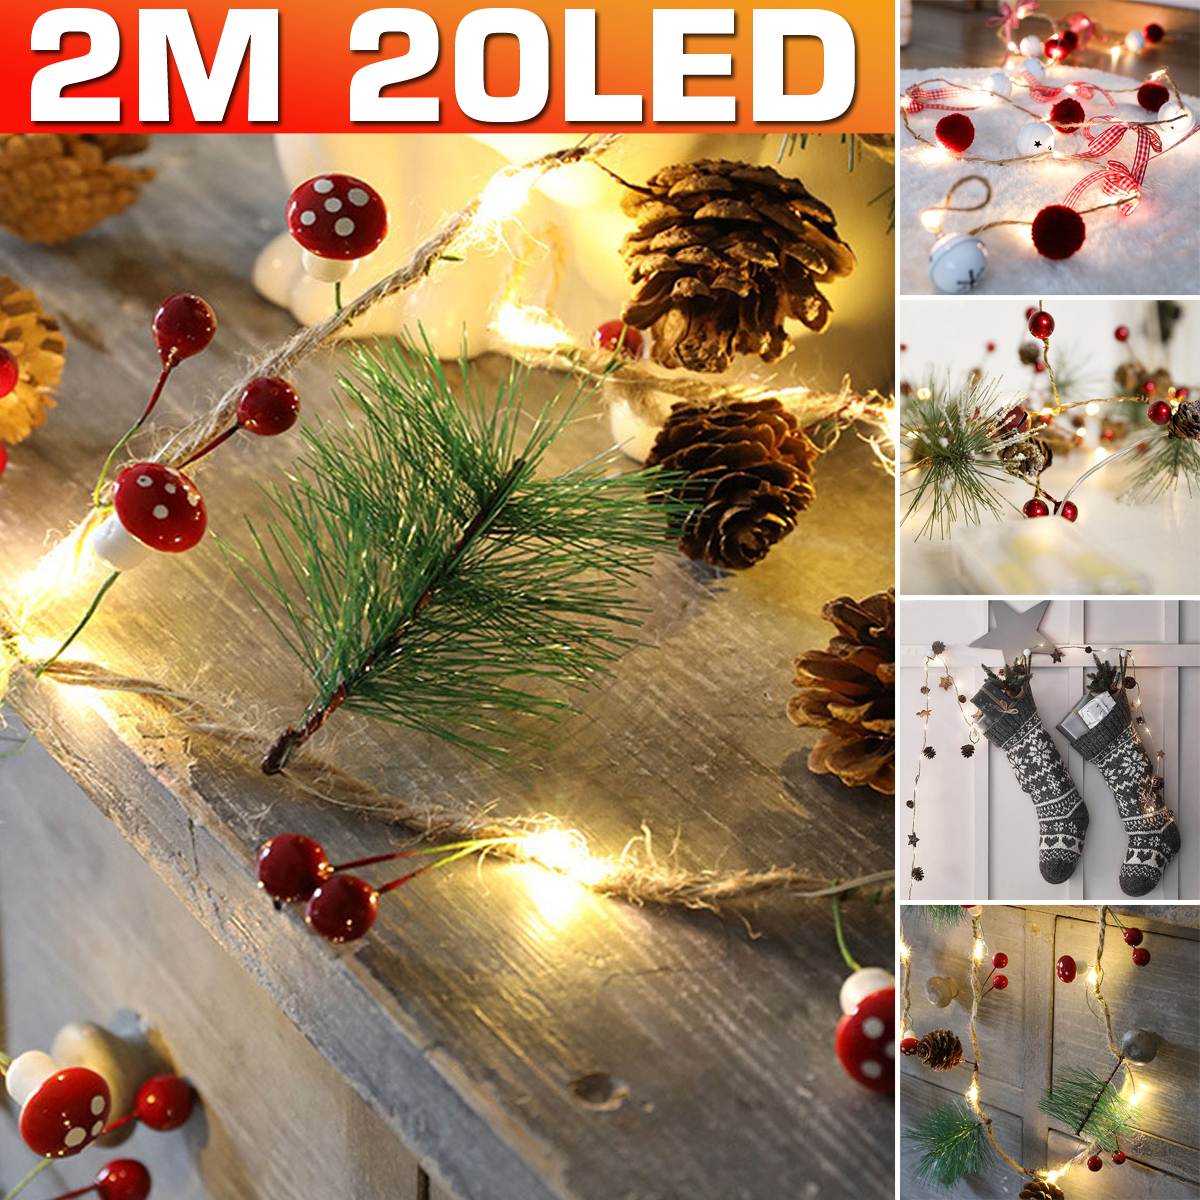 2M-20LED-Star-Fairy-String-Lights-Battery-Powered-Wedding-Christmas-Home-Decor-1723596-2